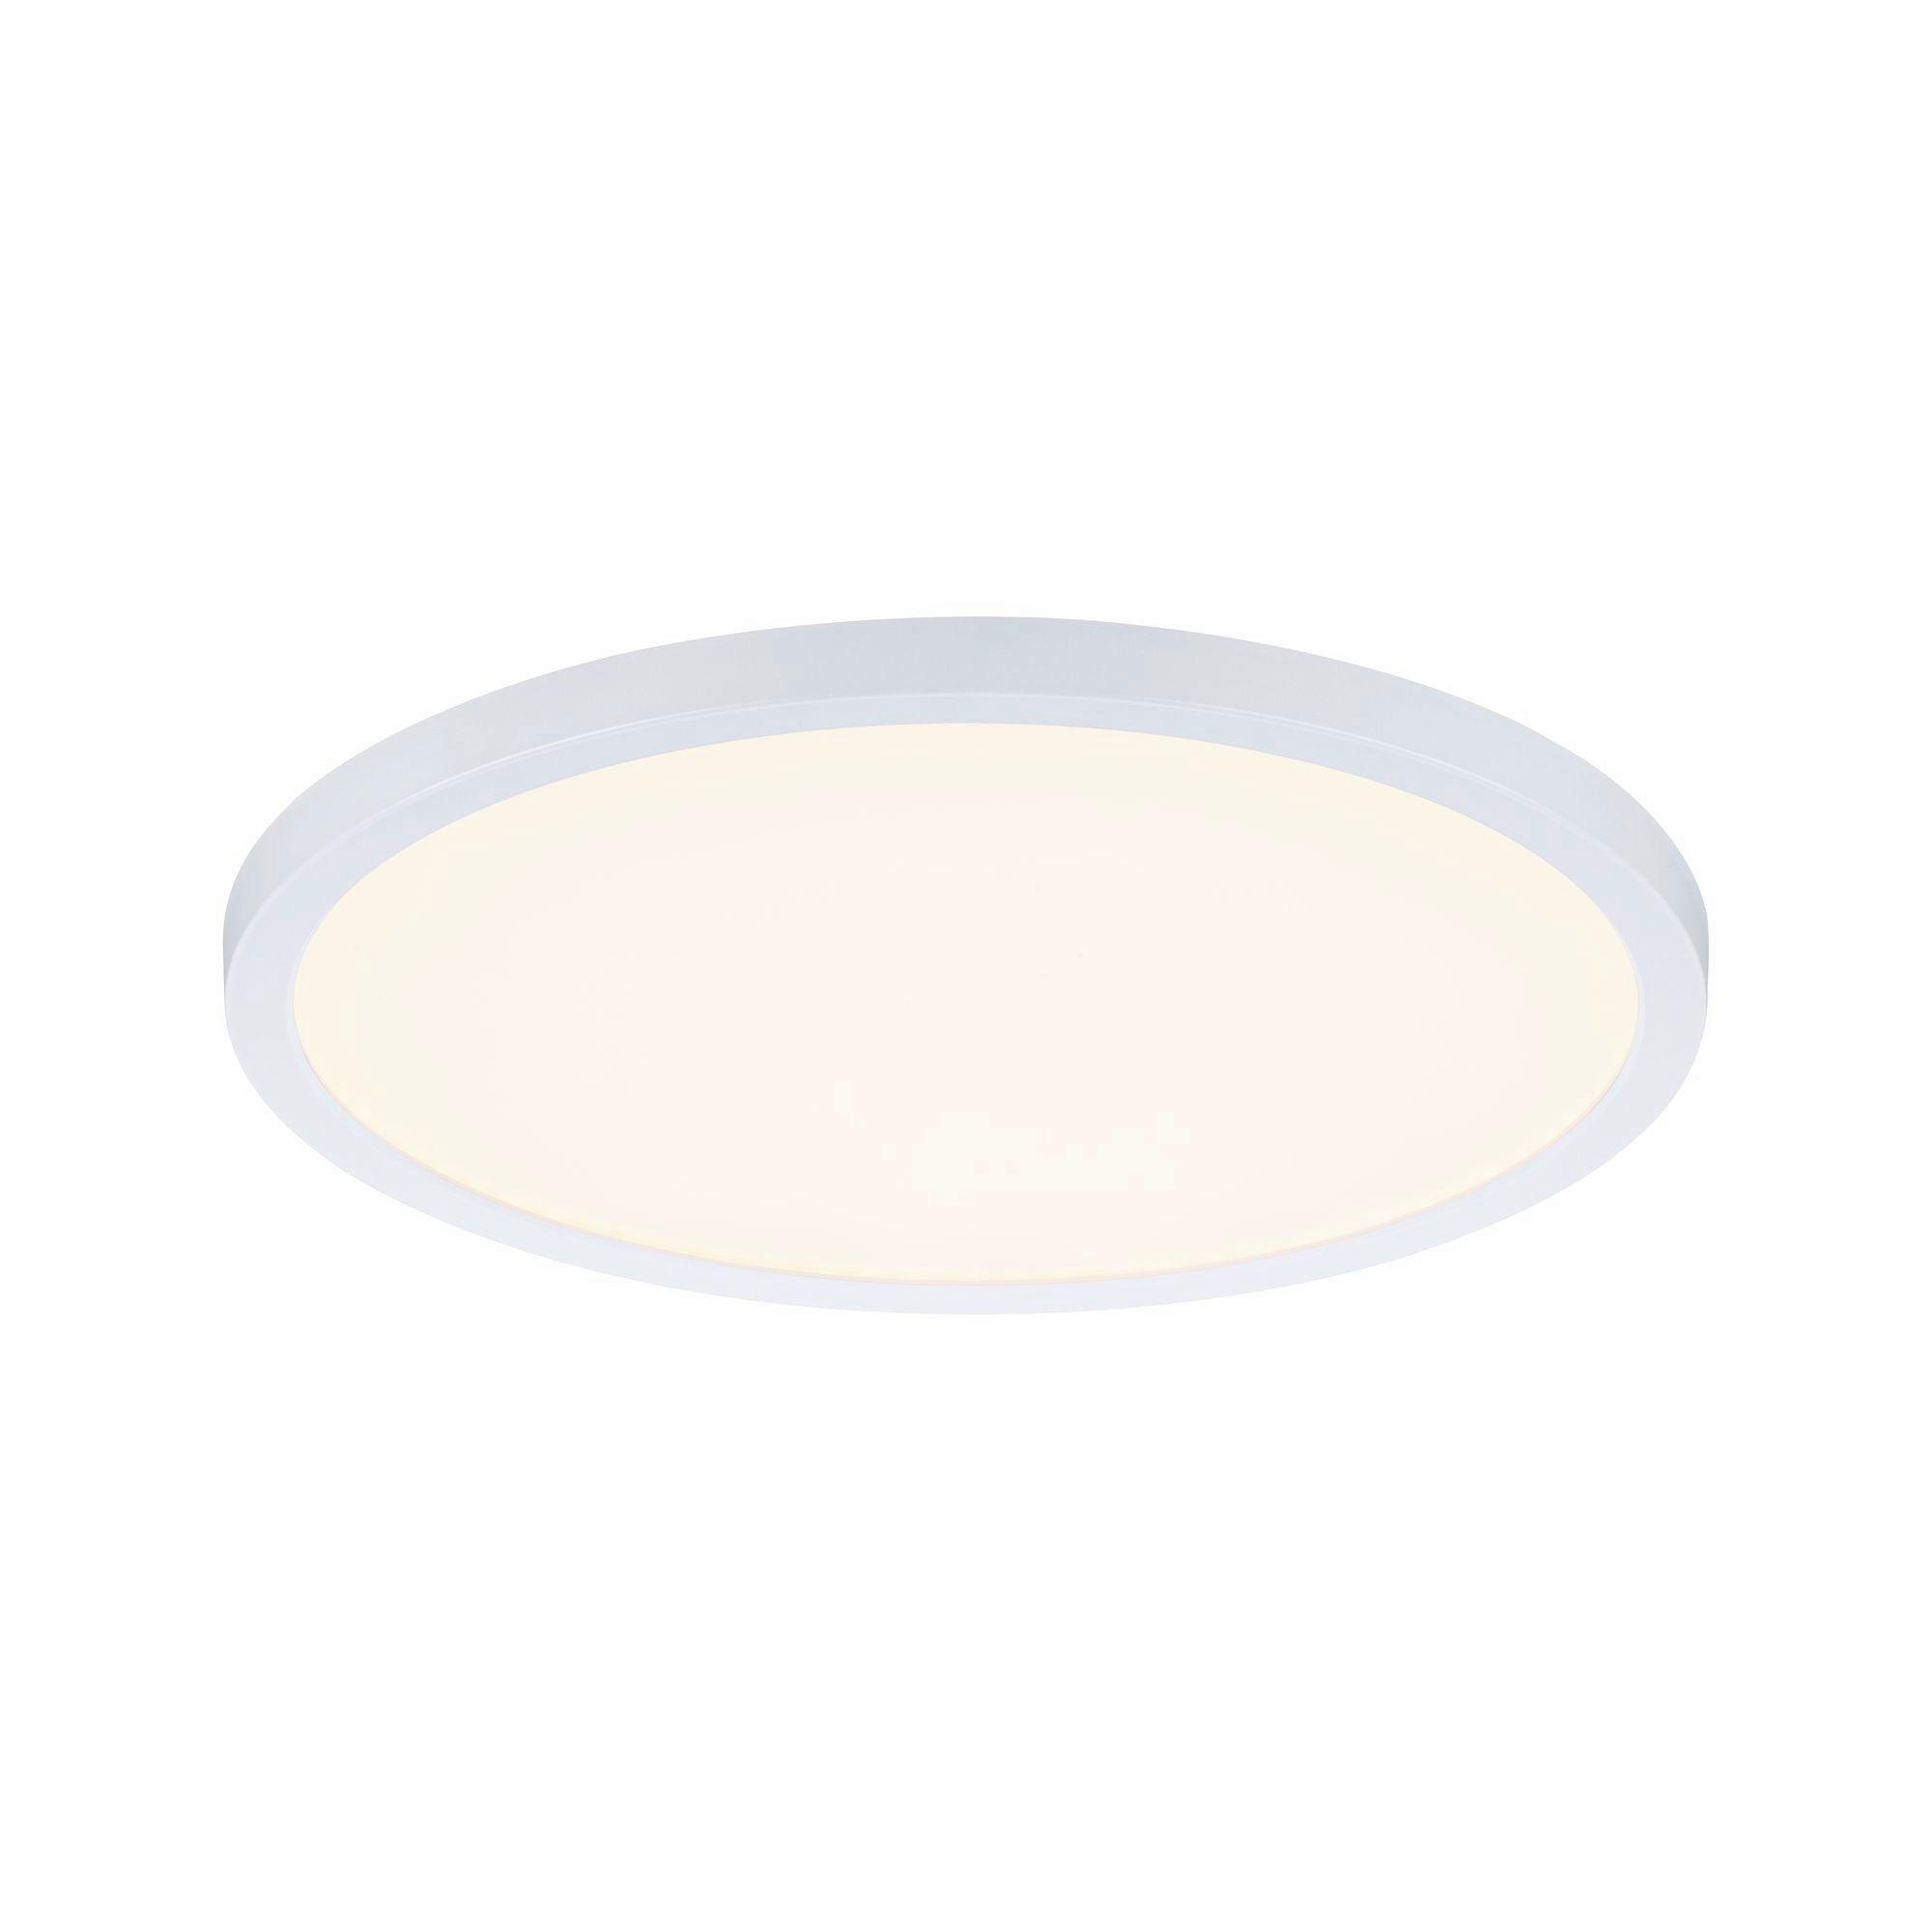 LED-PANEEL  - Weiß, Design, Kunststoff (23,0cm) - Paulmann